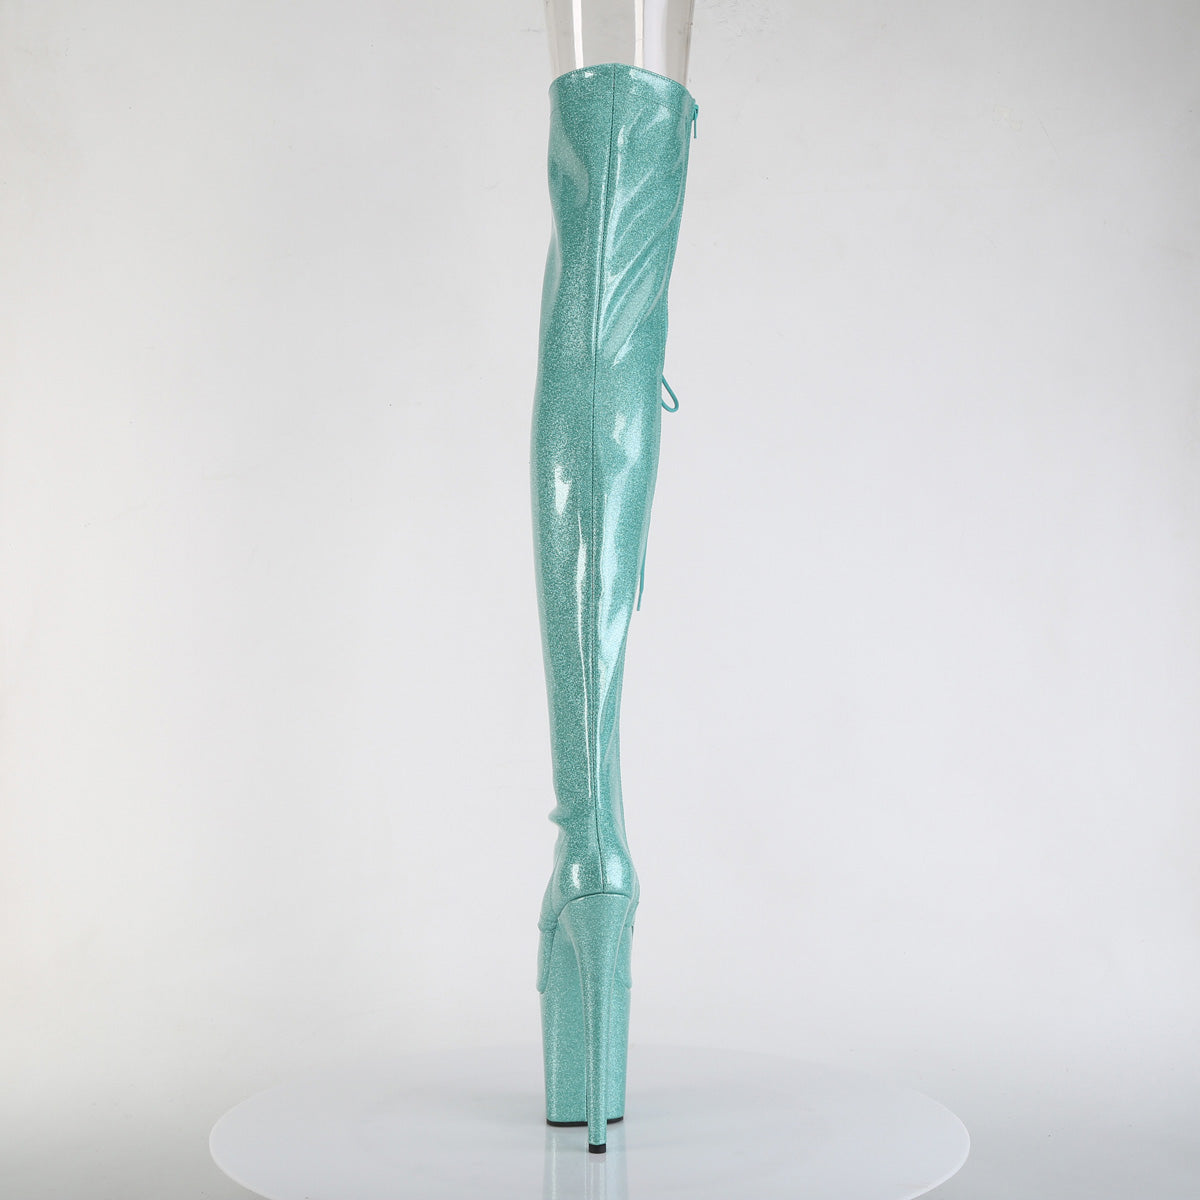 FLAMINGO-3021GP Pleaser Aqua Glitter Pole Dancing Thigh High Boots